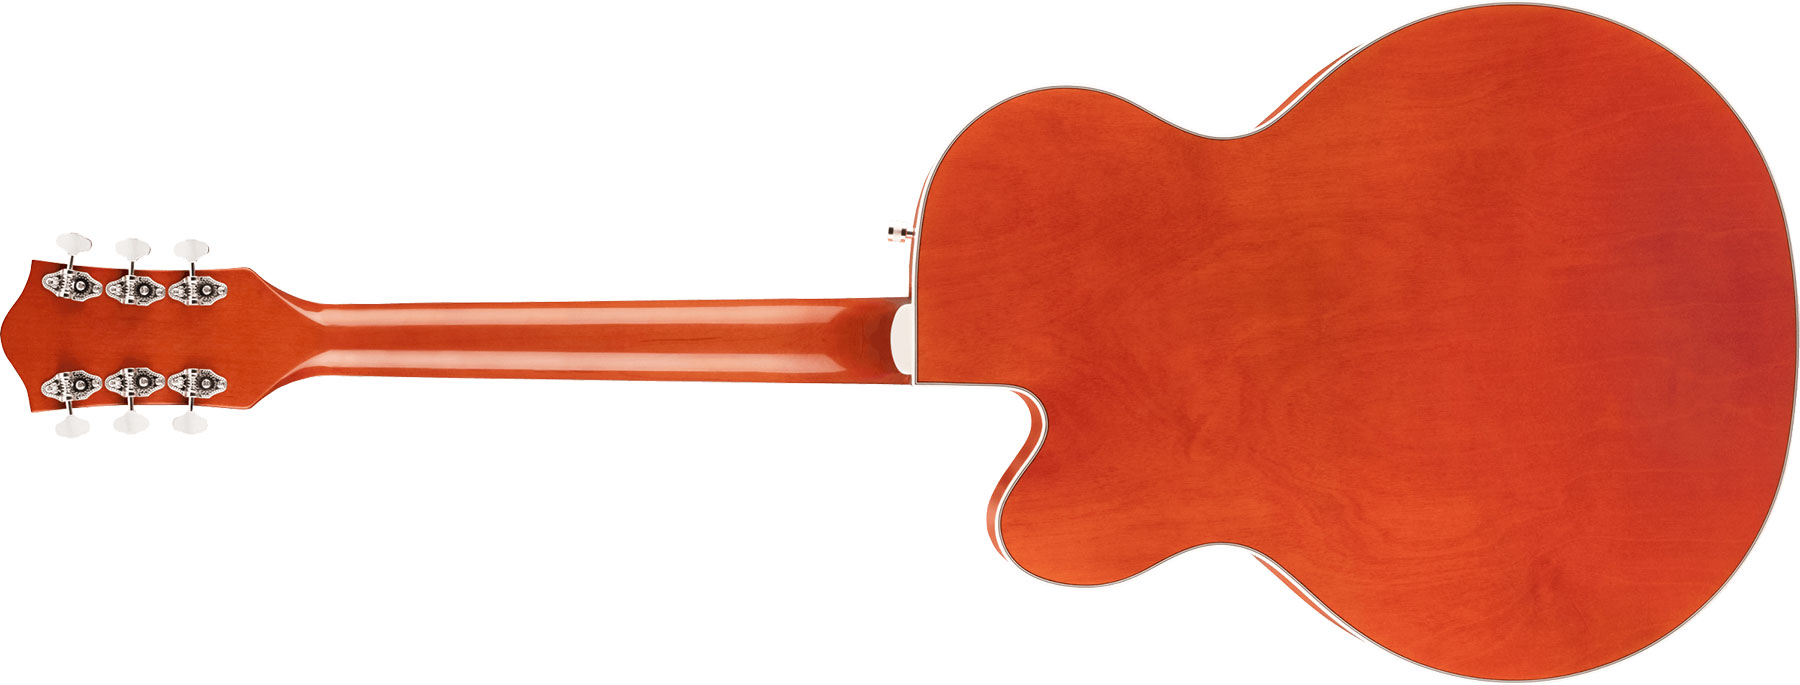 Gretsch G5420t Classic Electromatic Hollow Body Hh Trem Bigsby Lau - Orange Stain - Semi hollow elektriche gitaar - Variation 1